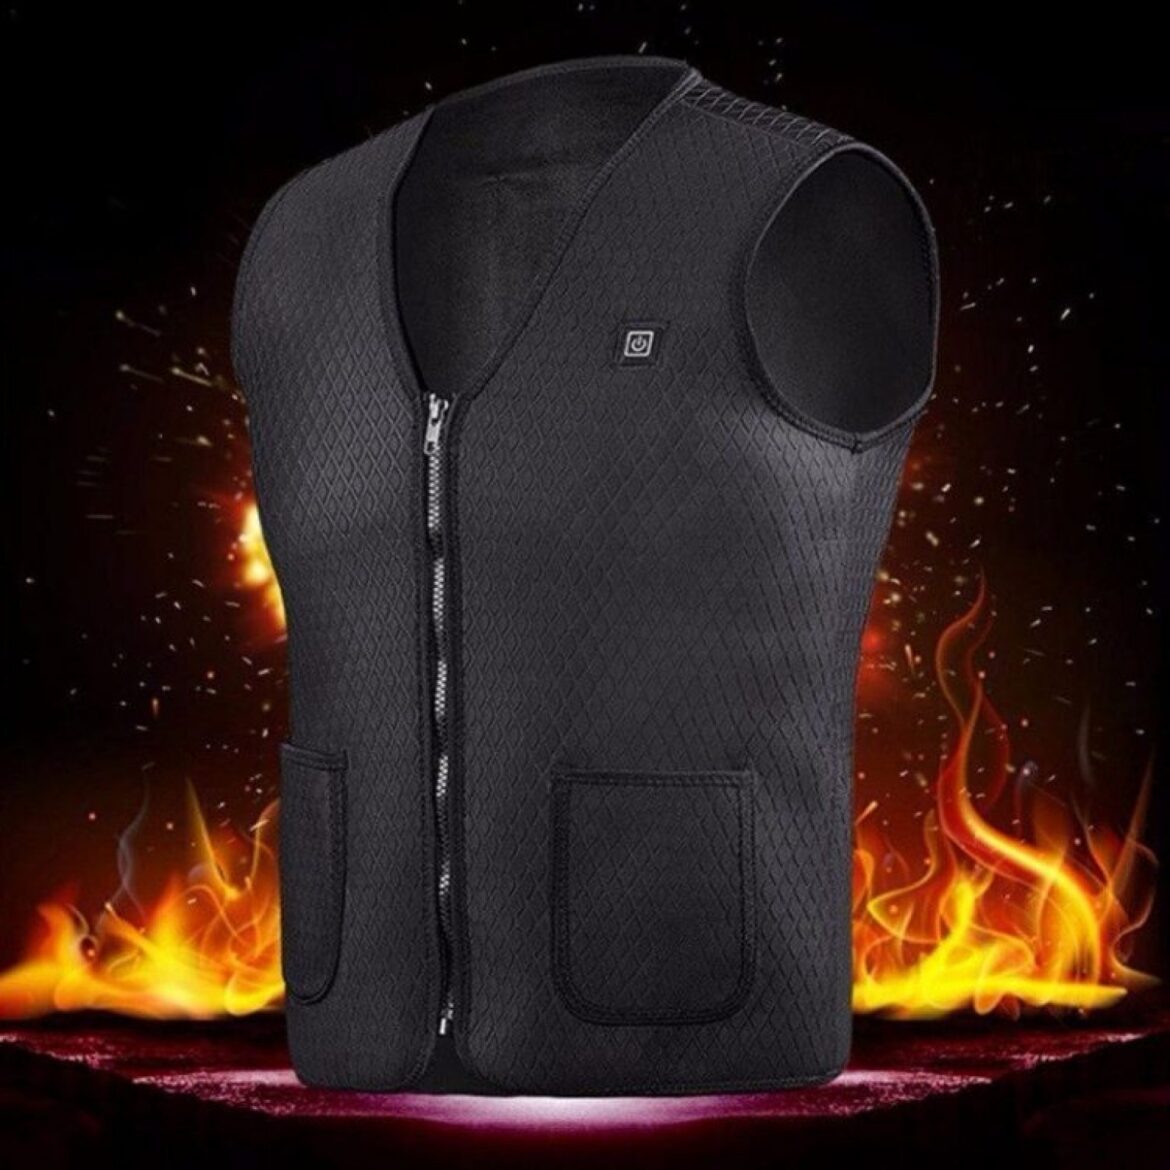 WINTERSECRET PRO REVIEW-Is It The Best Heated Vest?